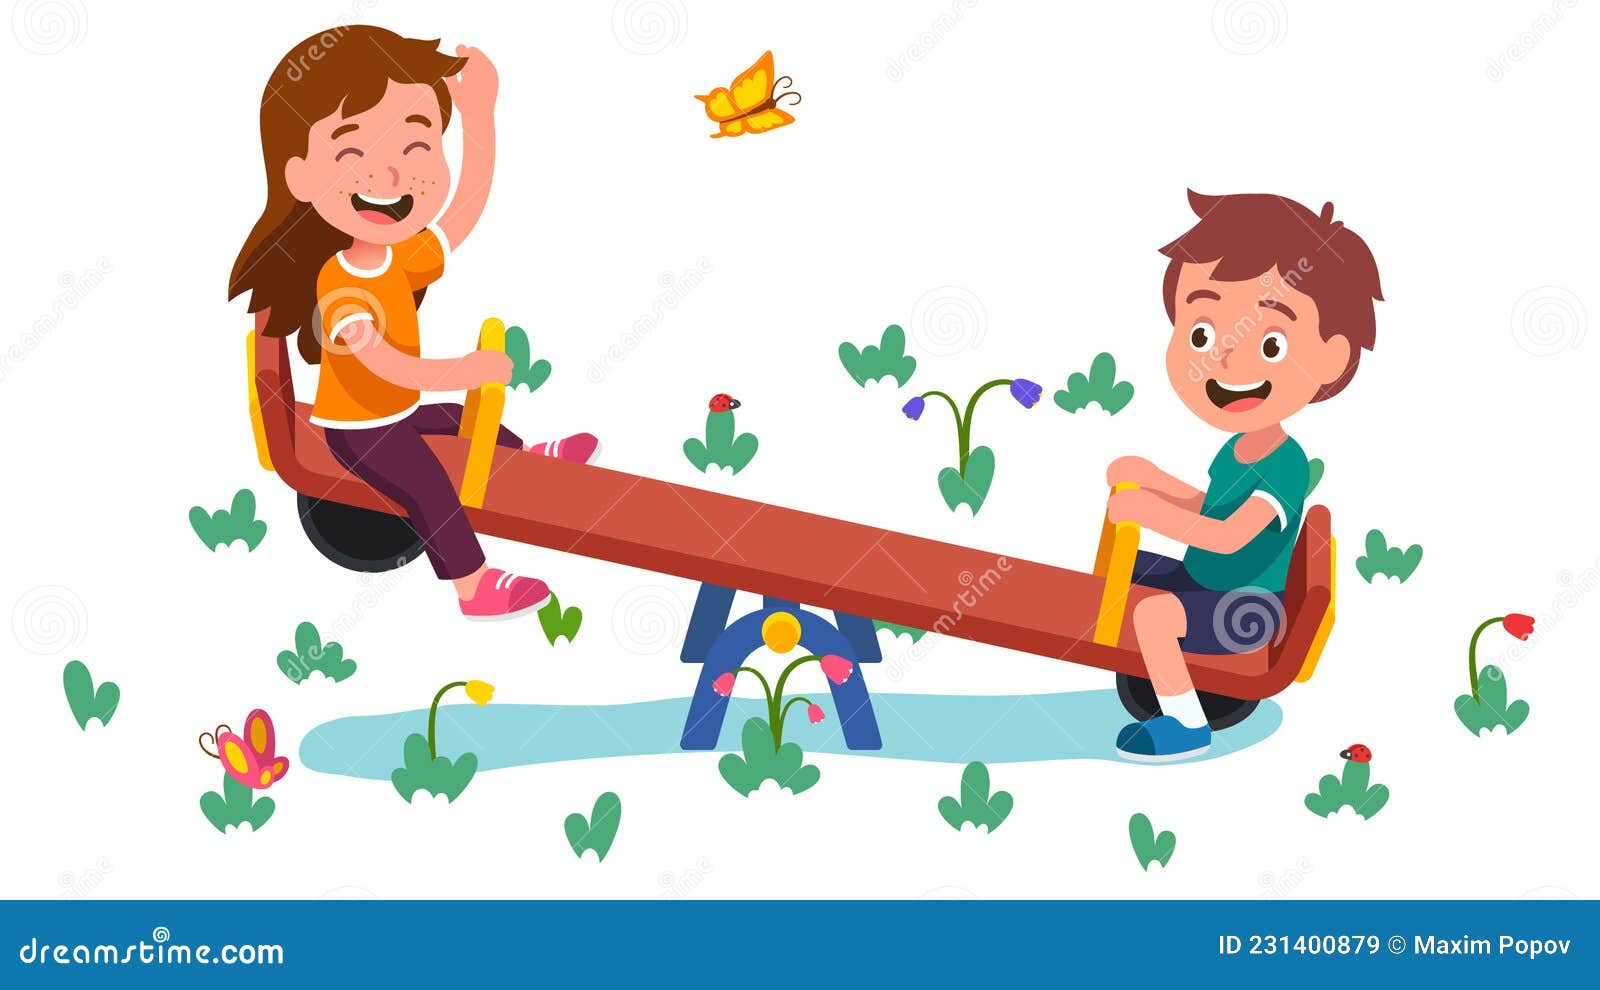 happy girl, boy kids swinging on seesaw together